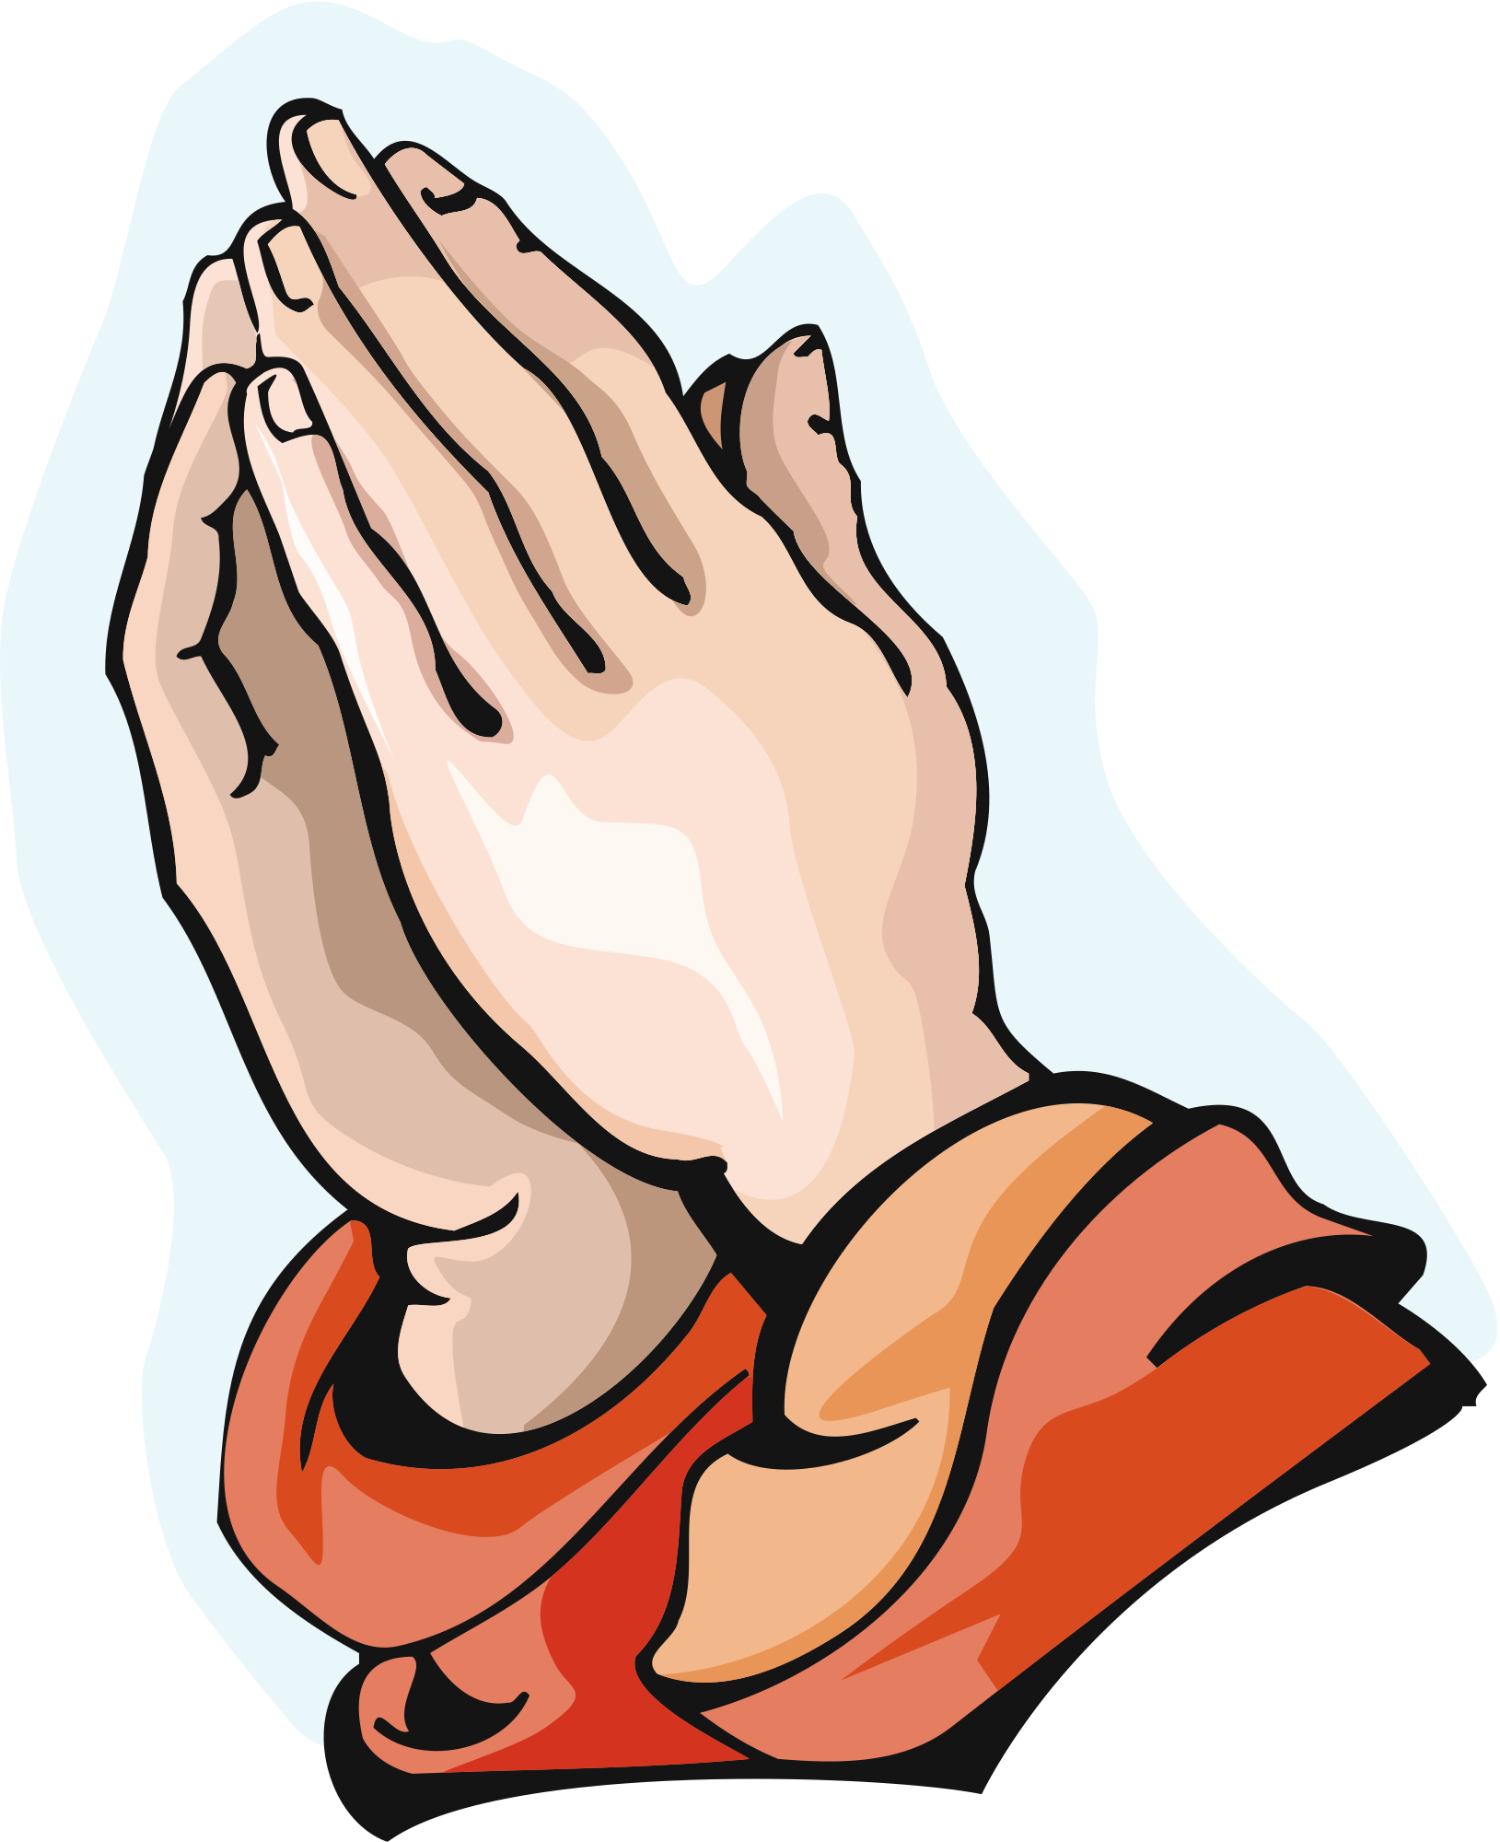 folded hands praying pray pra